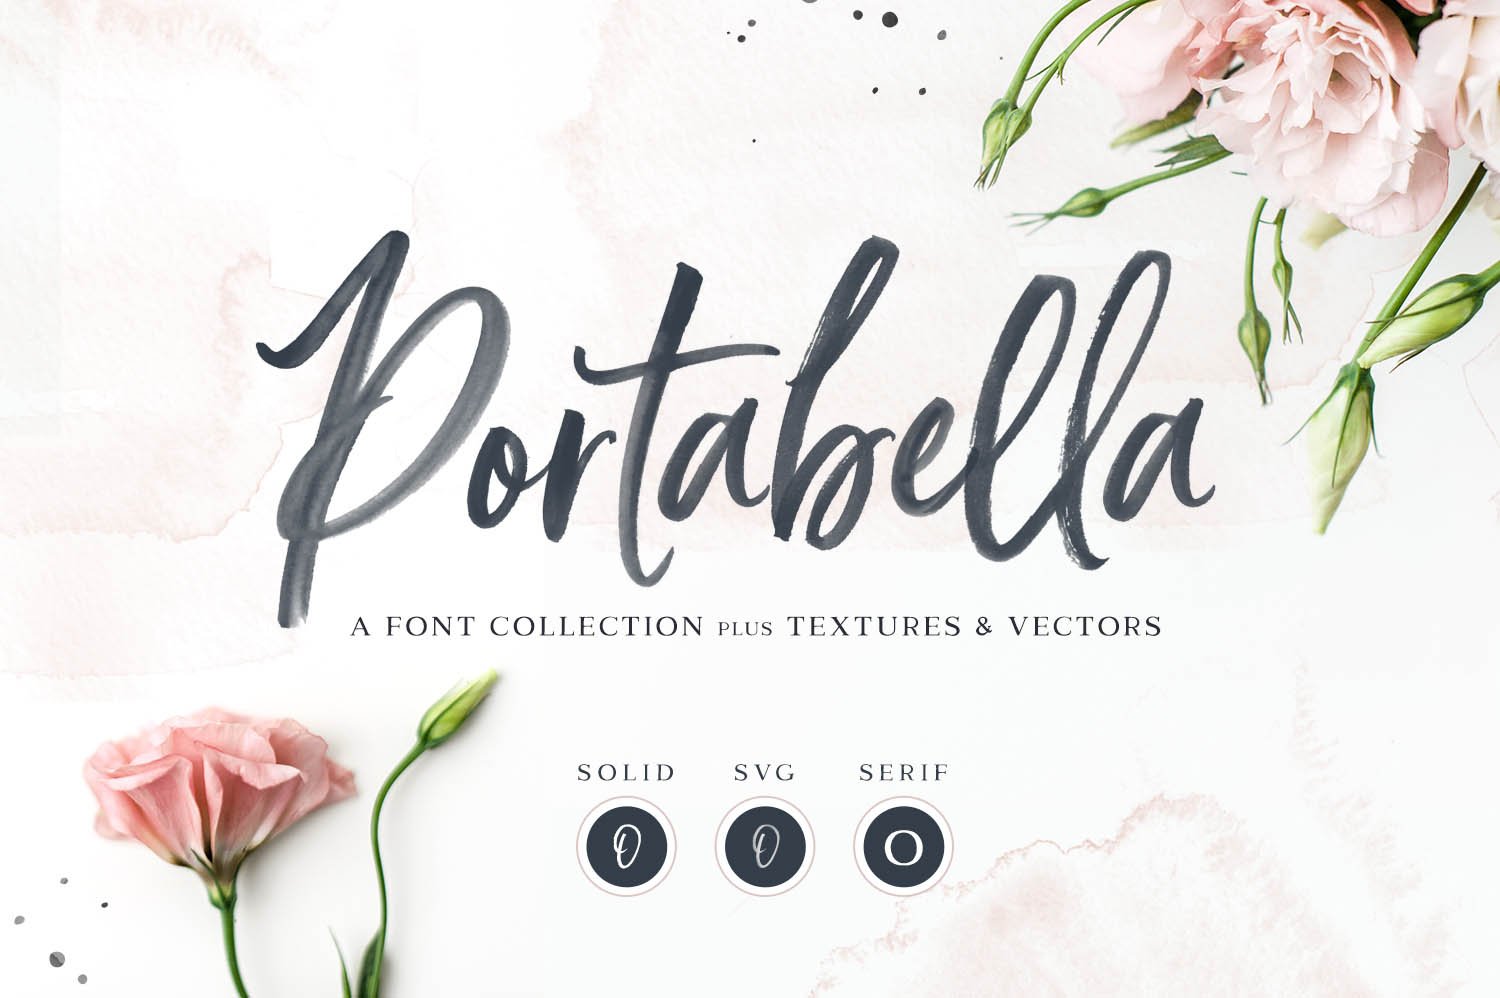 Portabella Font Collection cover